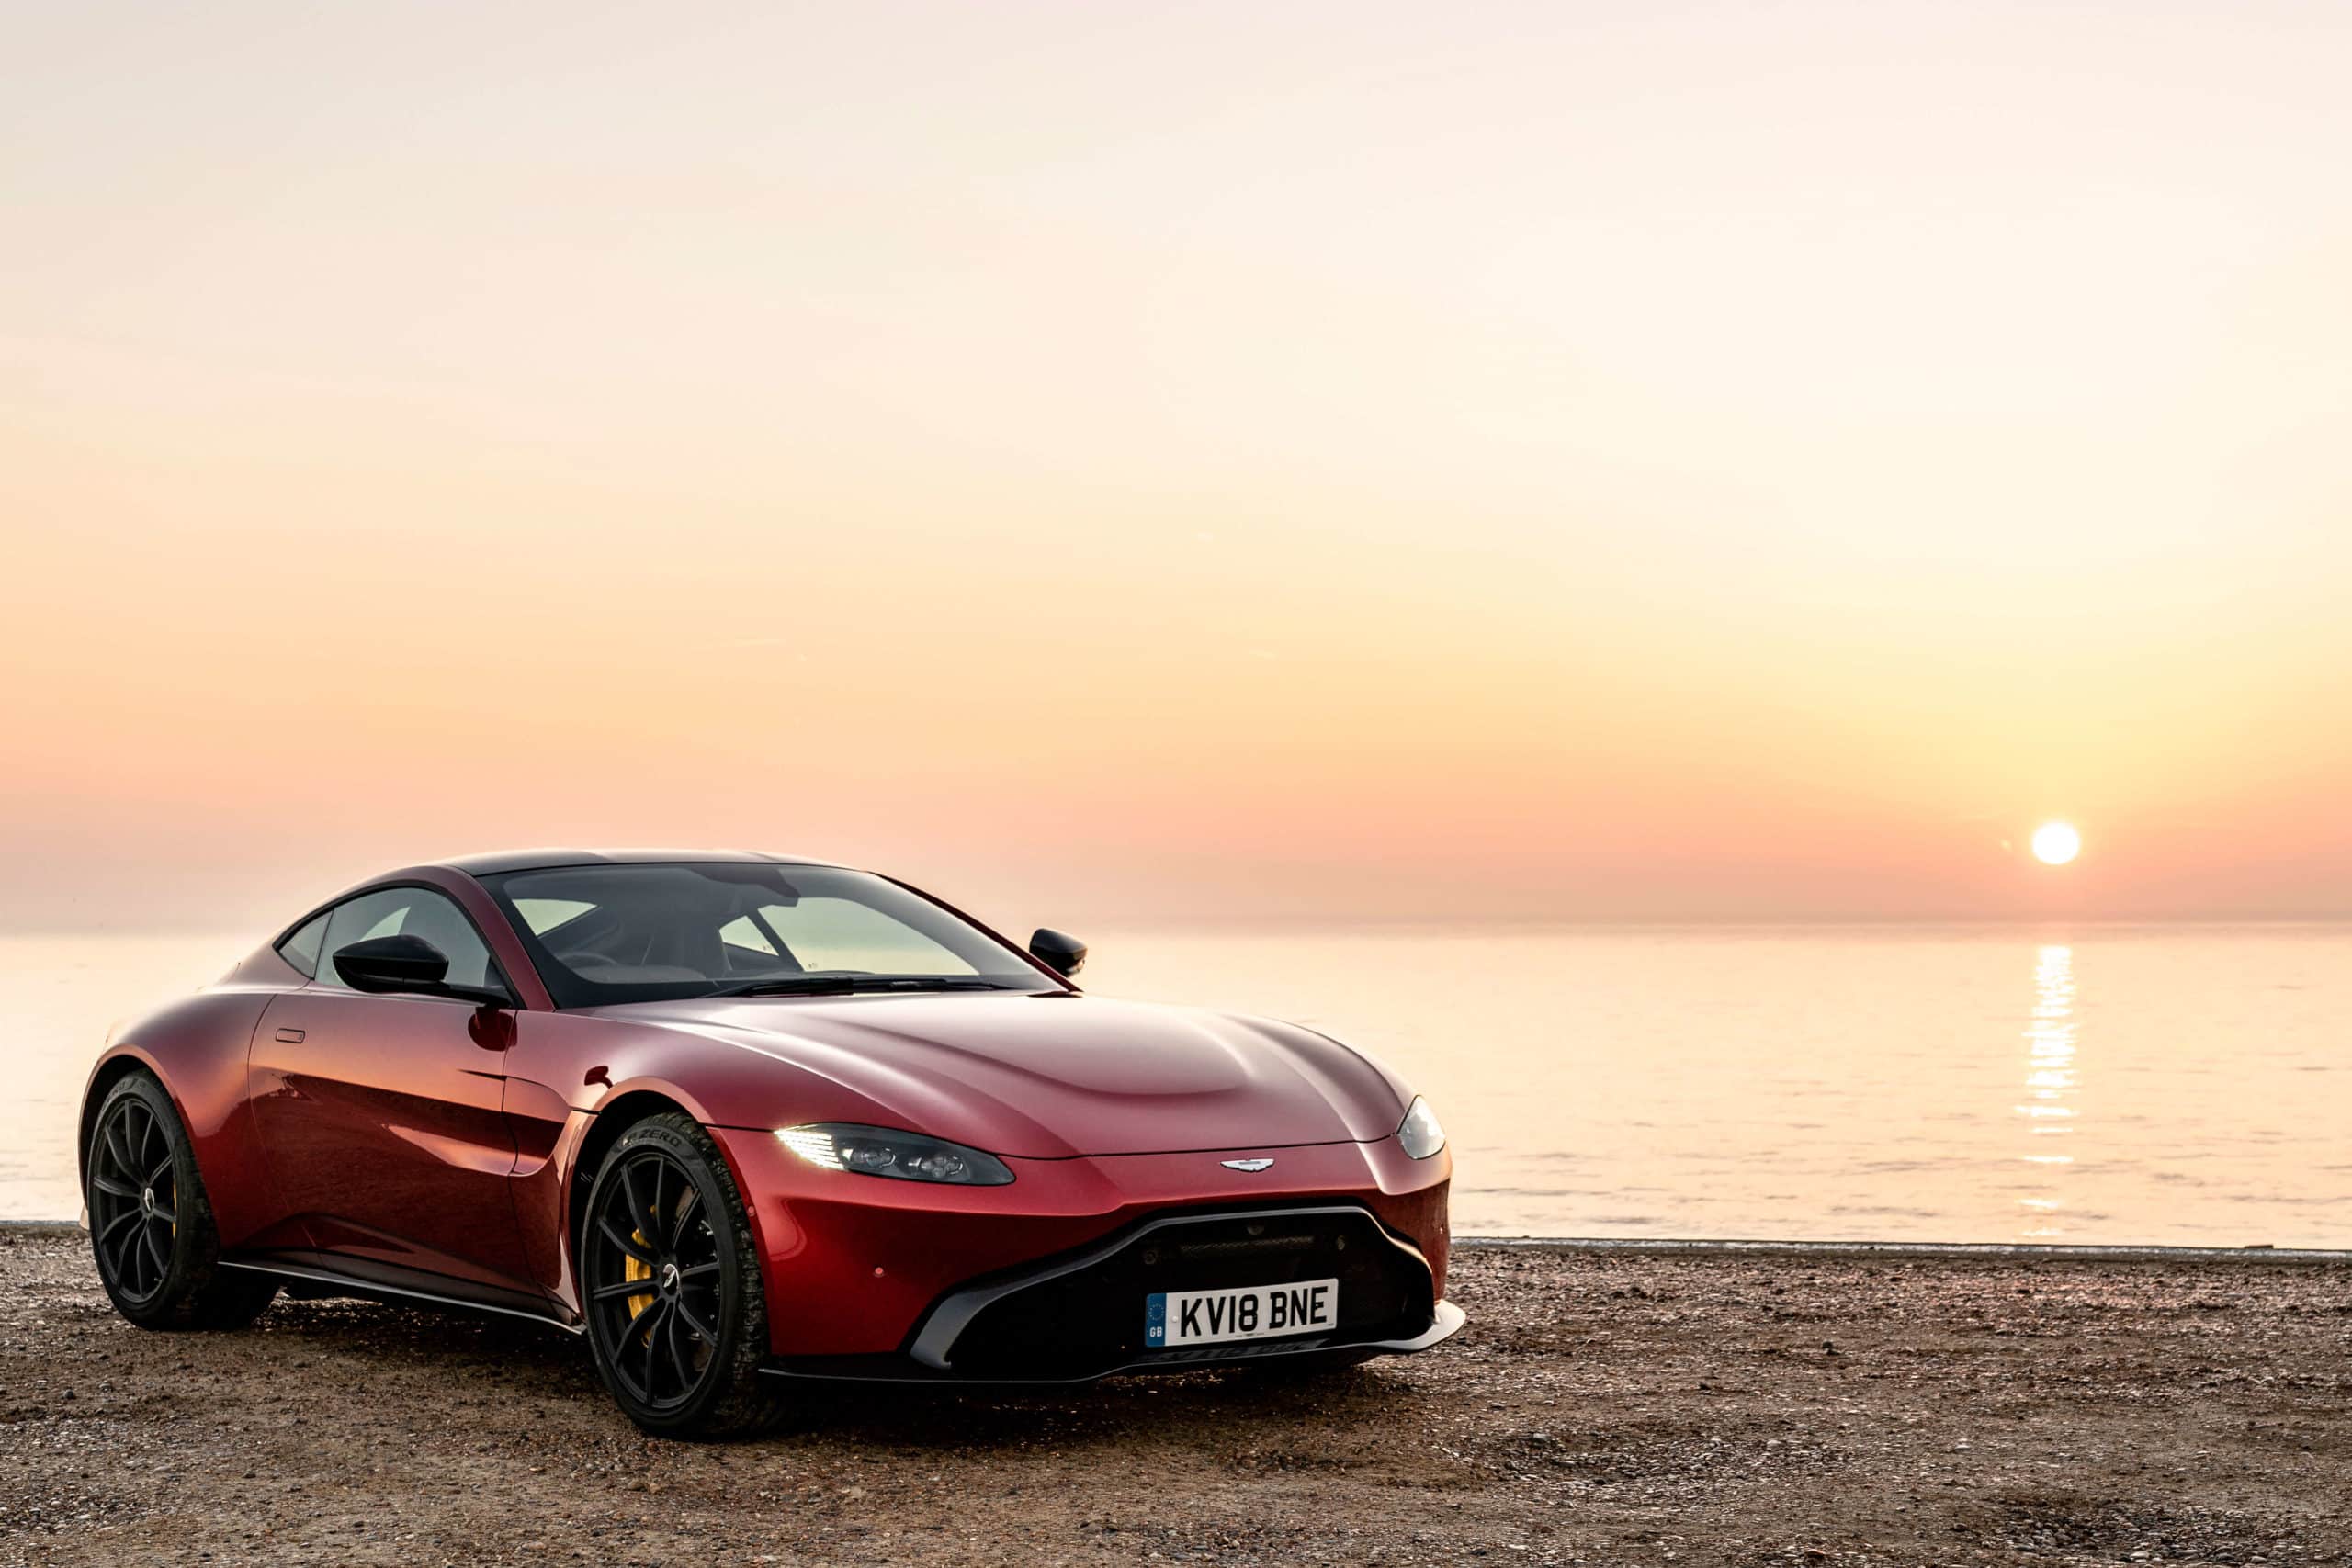 Aston Martin V8 Vantage Leasing Fur 1 199 Mtl Brutto Sparneuwagen De